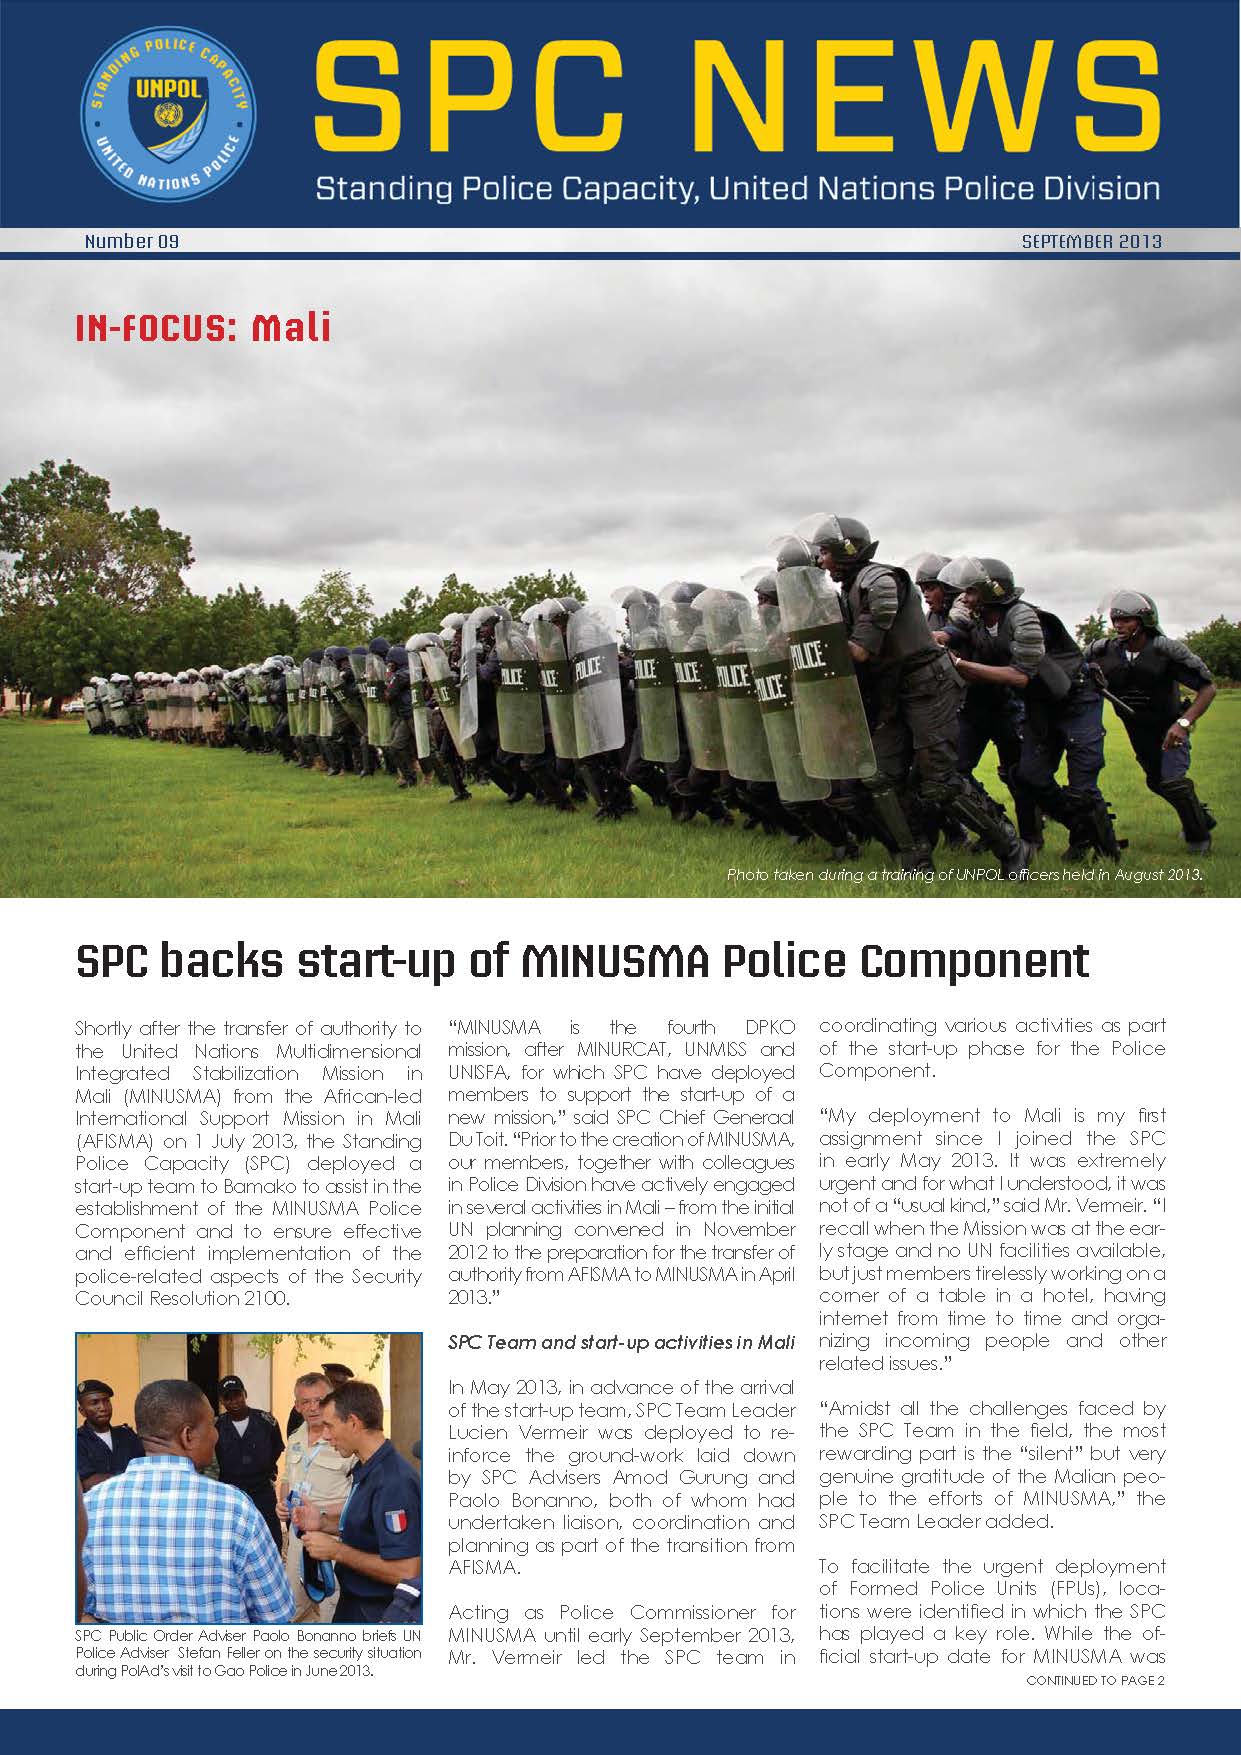 SPC News February 2013